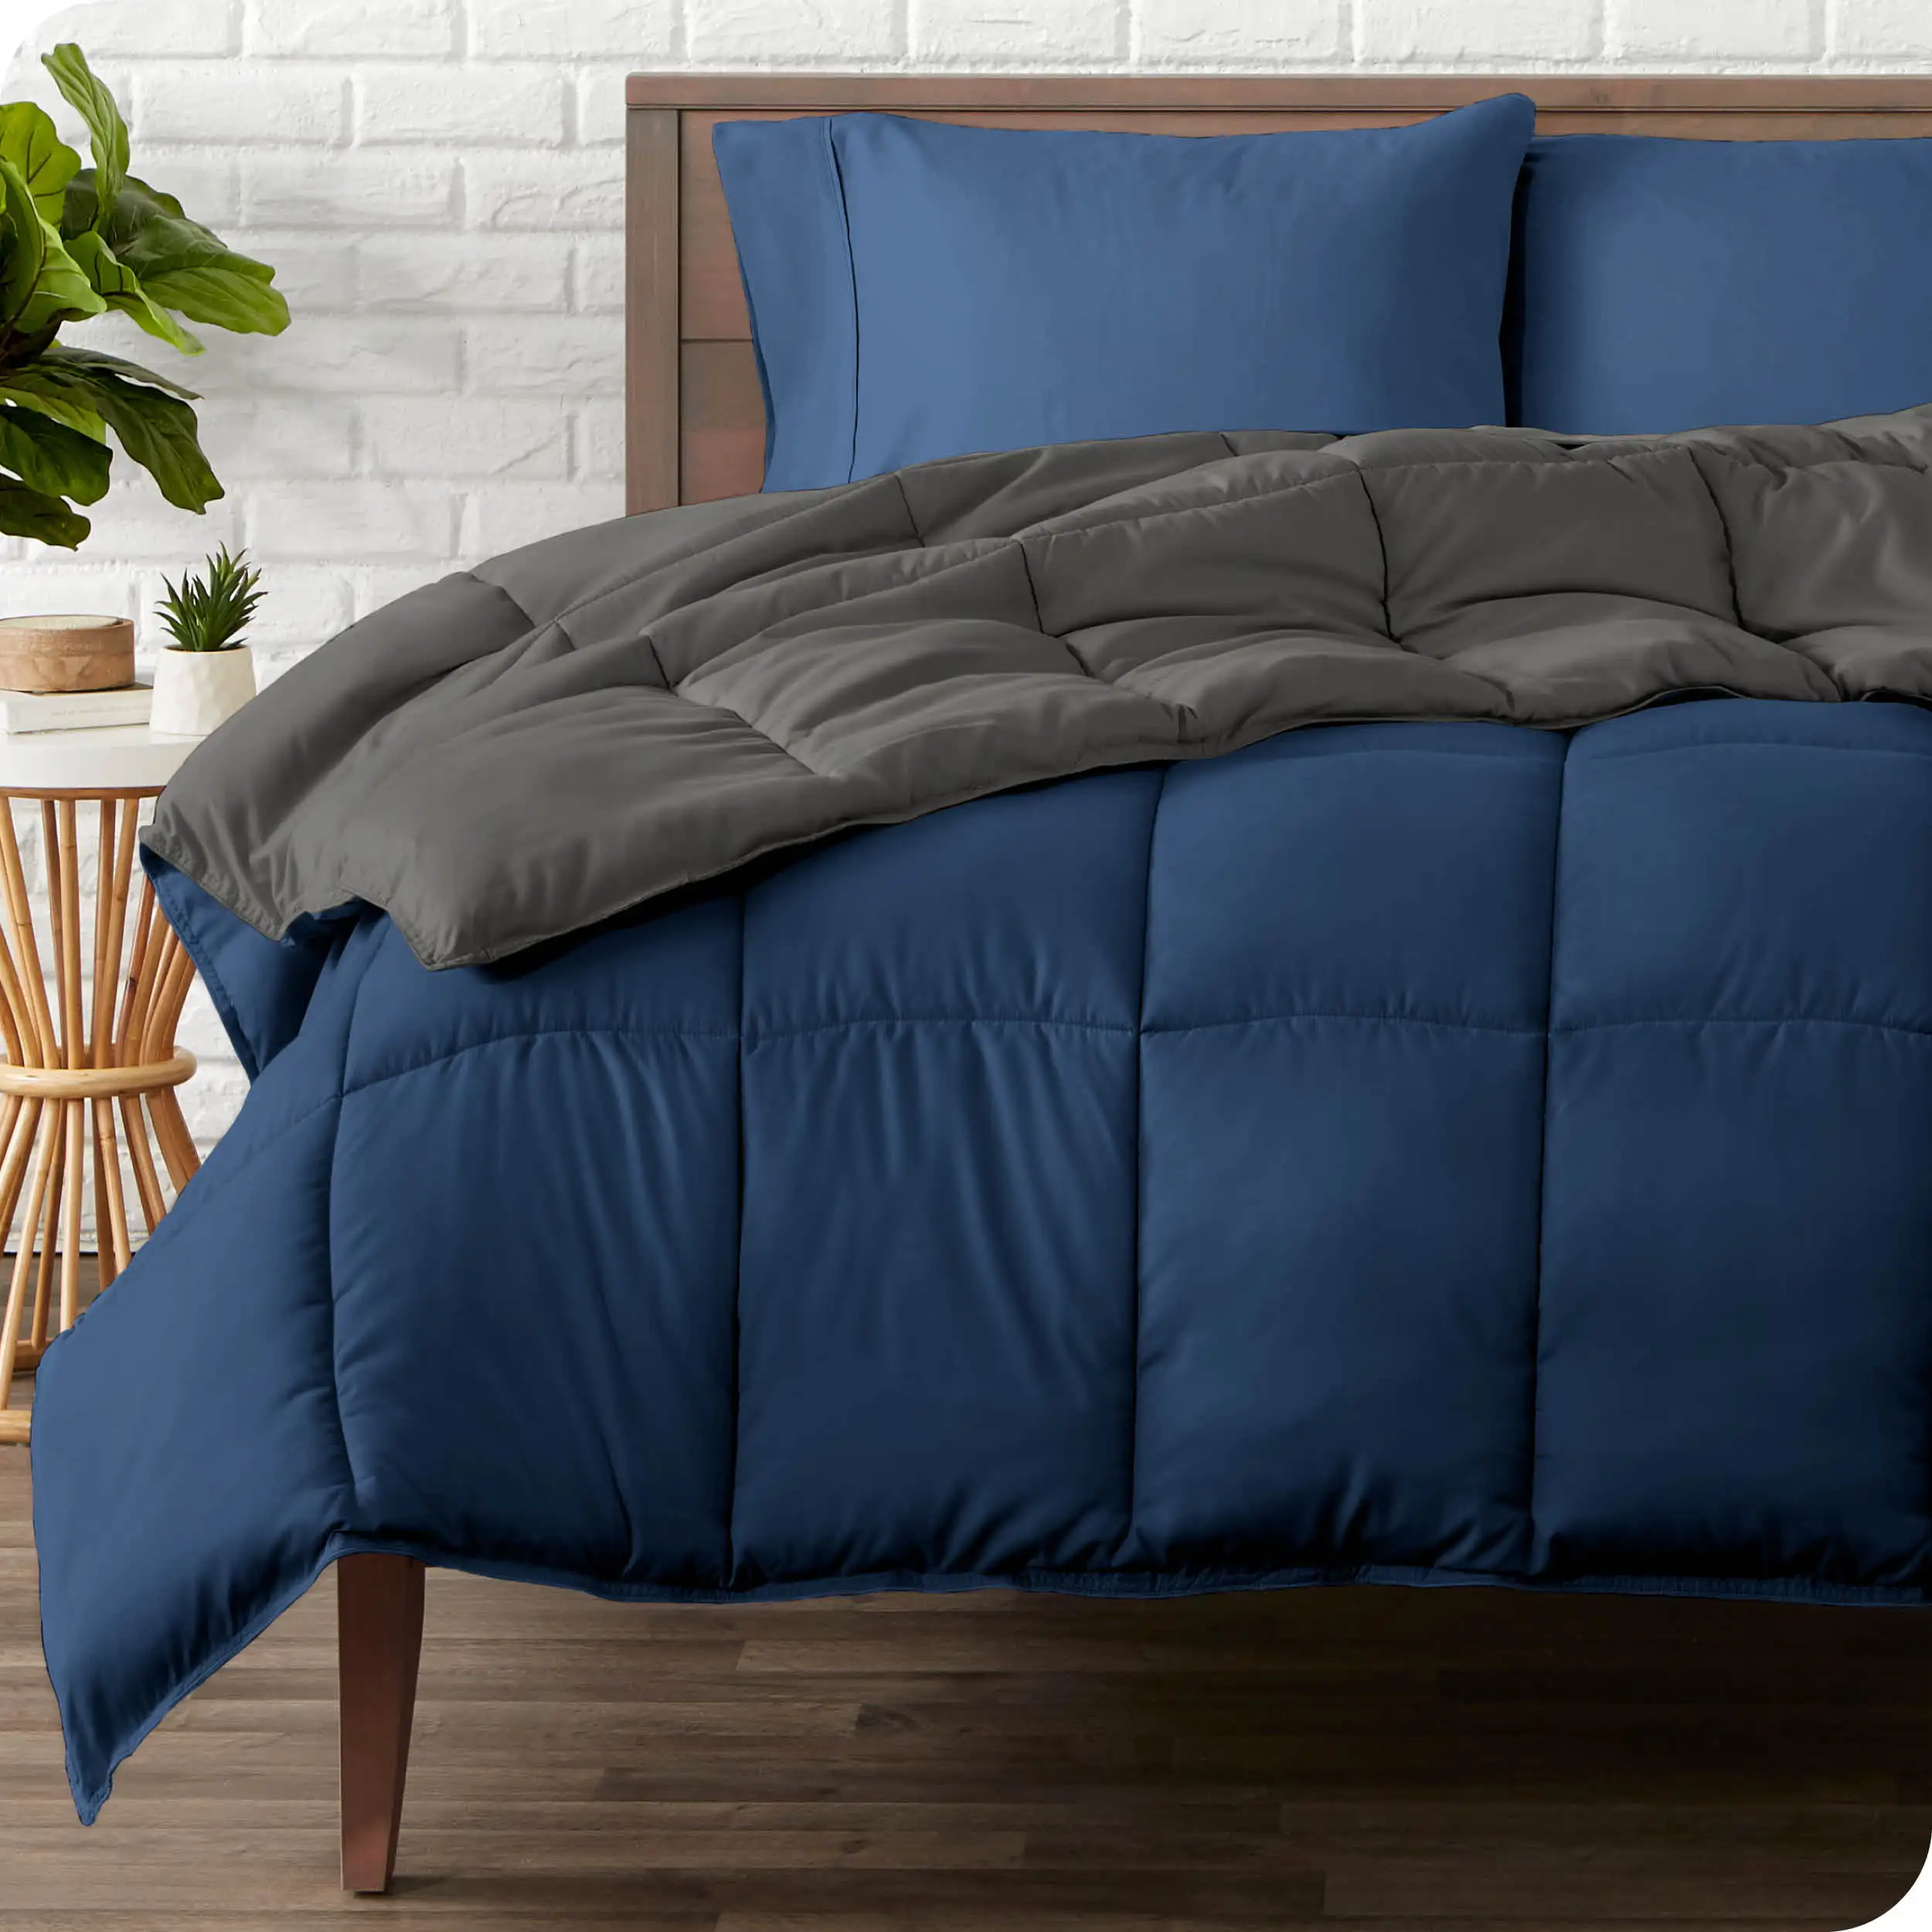 

Bare Home Ultra-Soft Reversible Comforter - Goose Down Alternative - Queen, Dark Blue/Gray